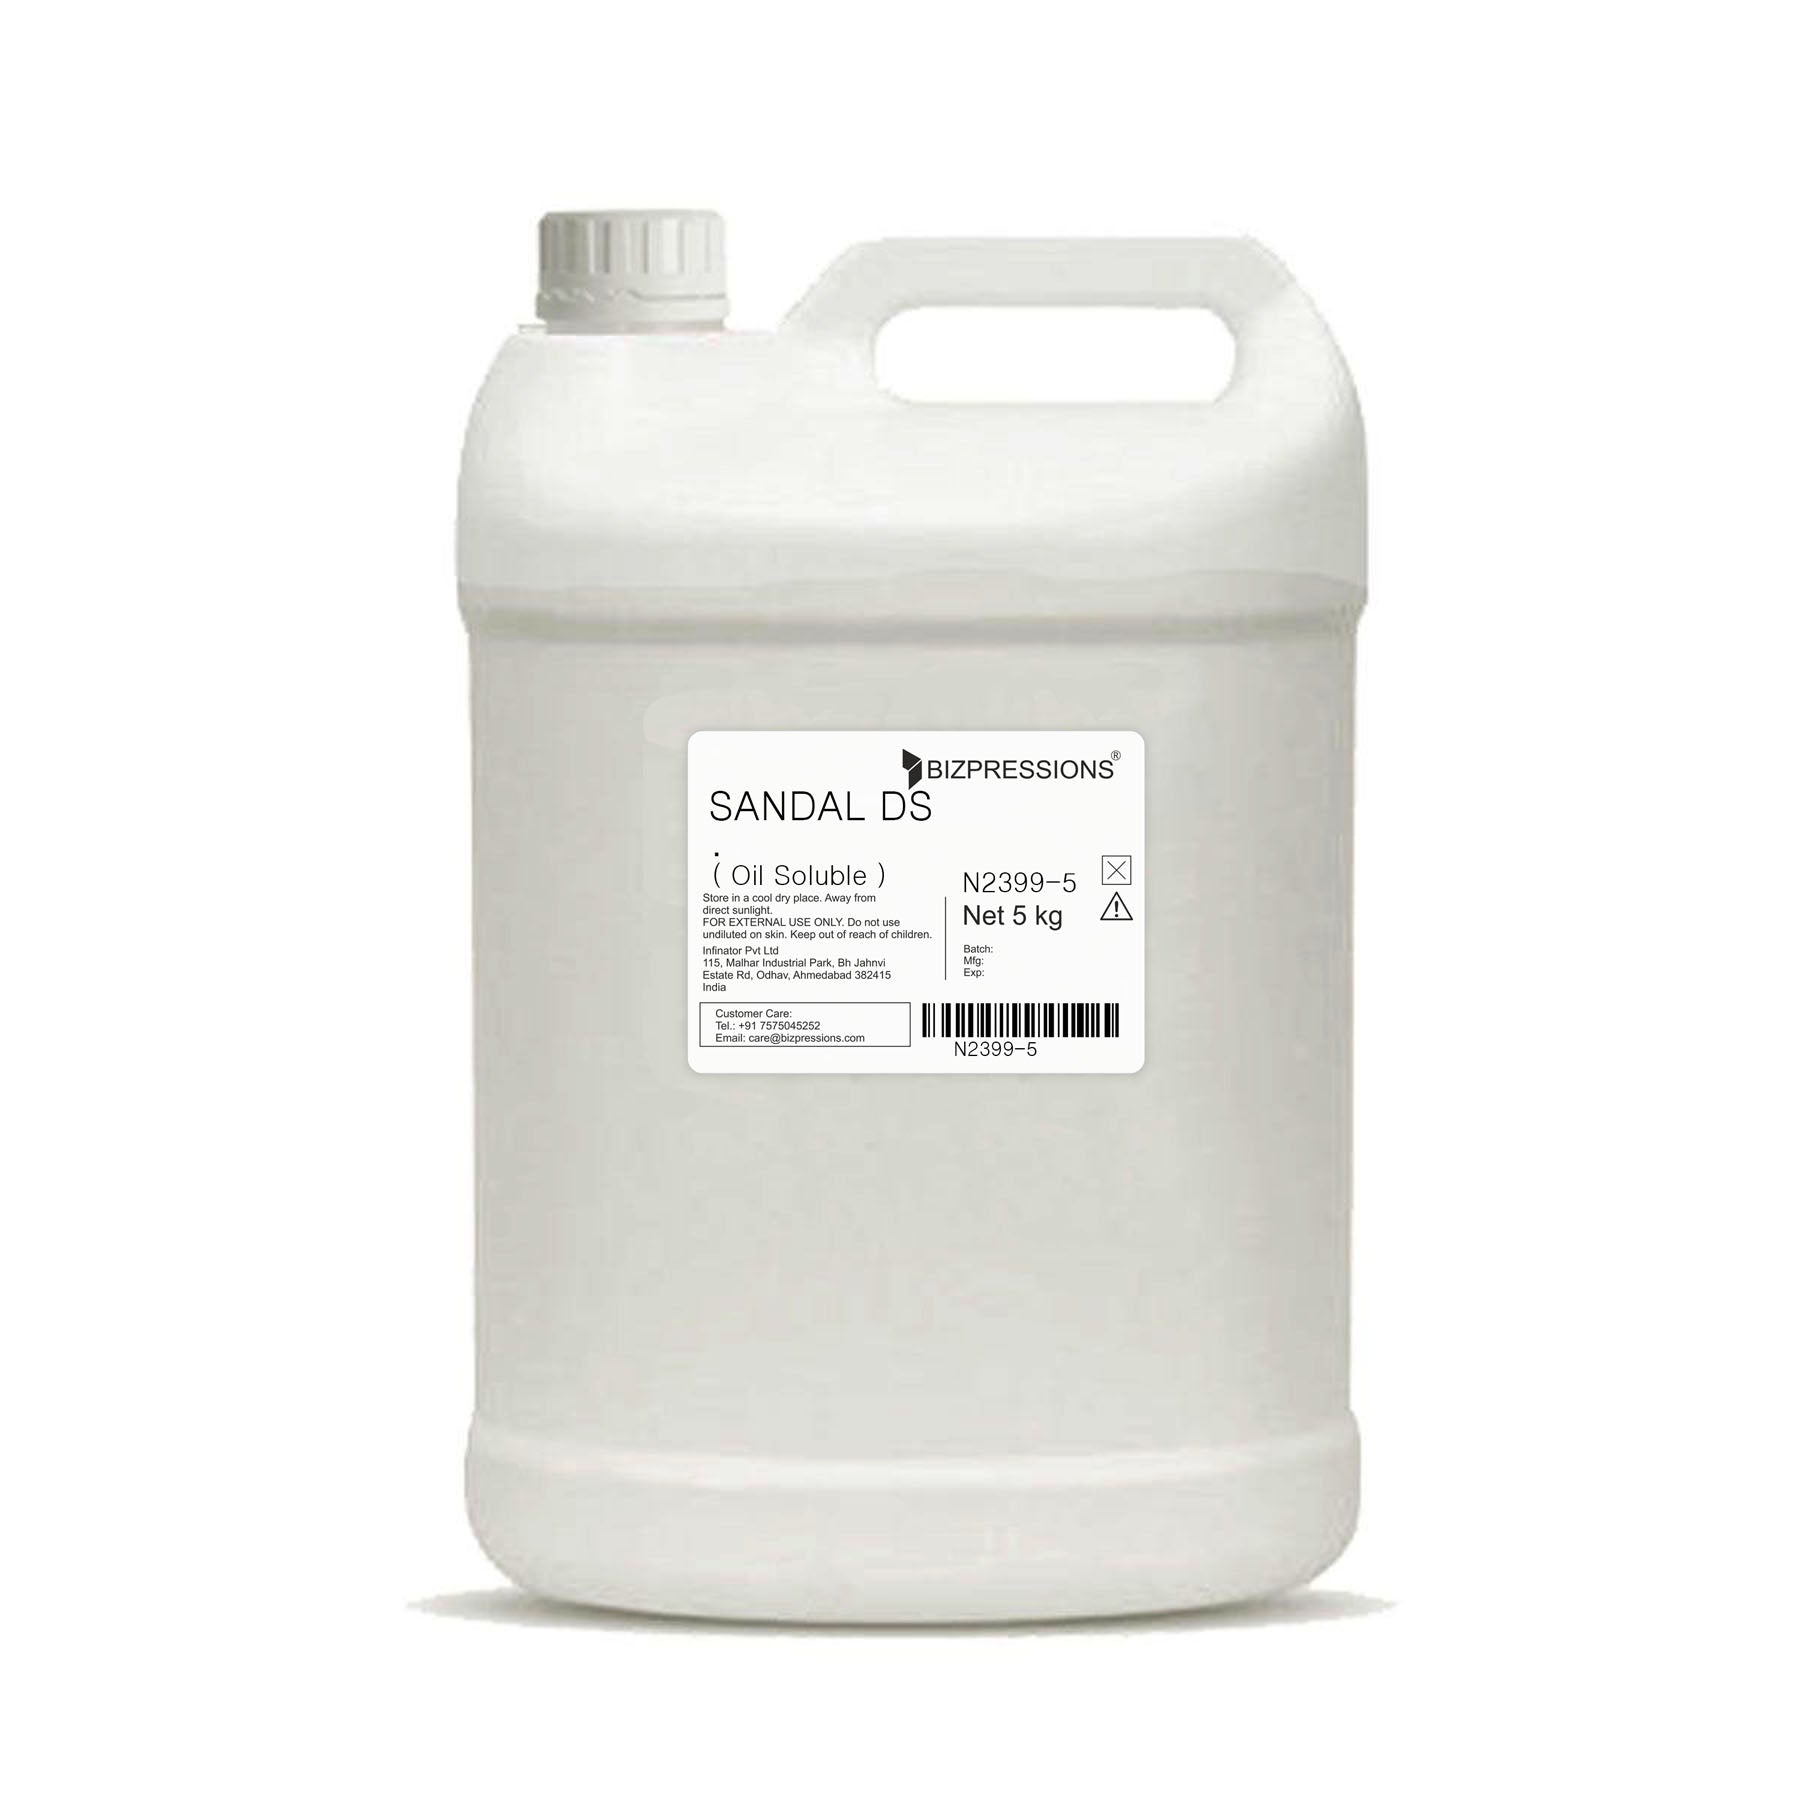 SANDAL DS - Fragrance ( Oil Soluble ) - 5 kg